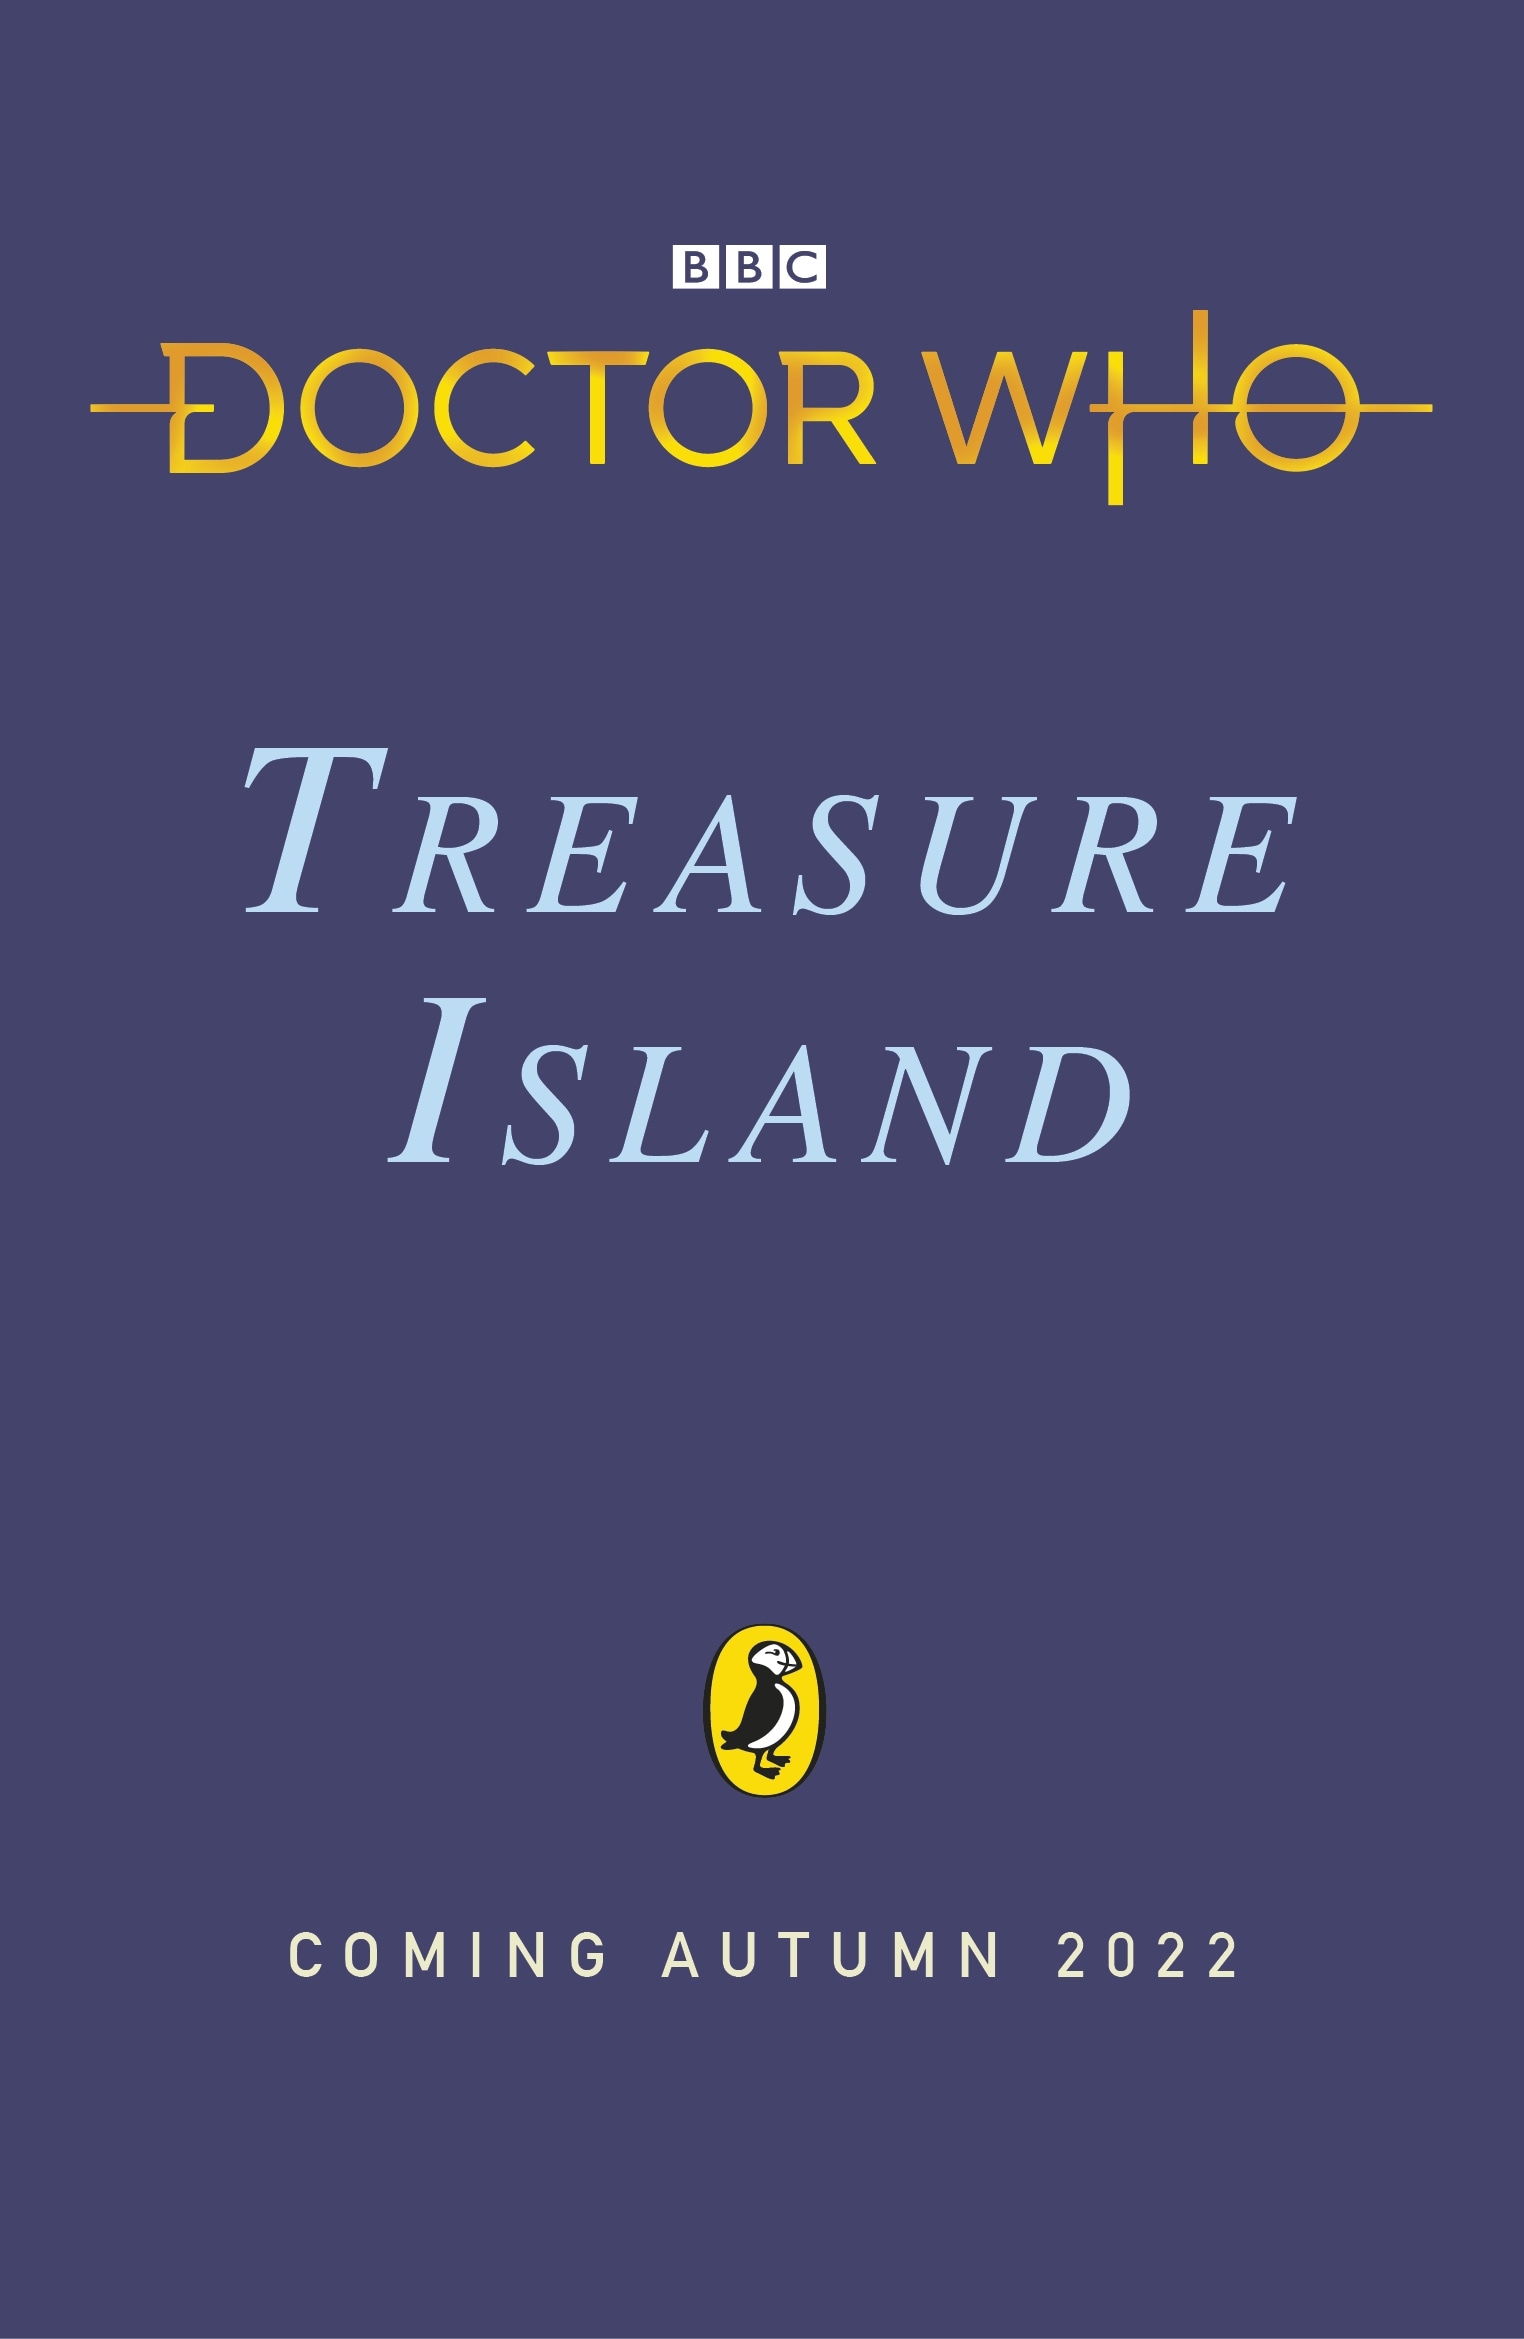 Book “Doctor Who: Treasure Island” by Bali Rai, Doctor Who — October 20, 2022